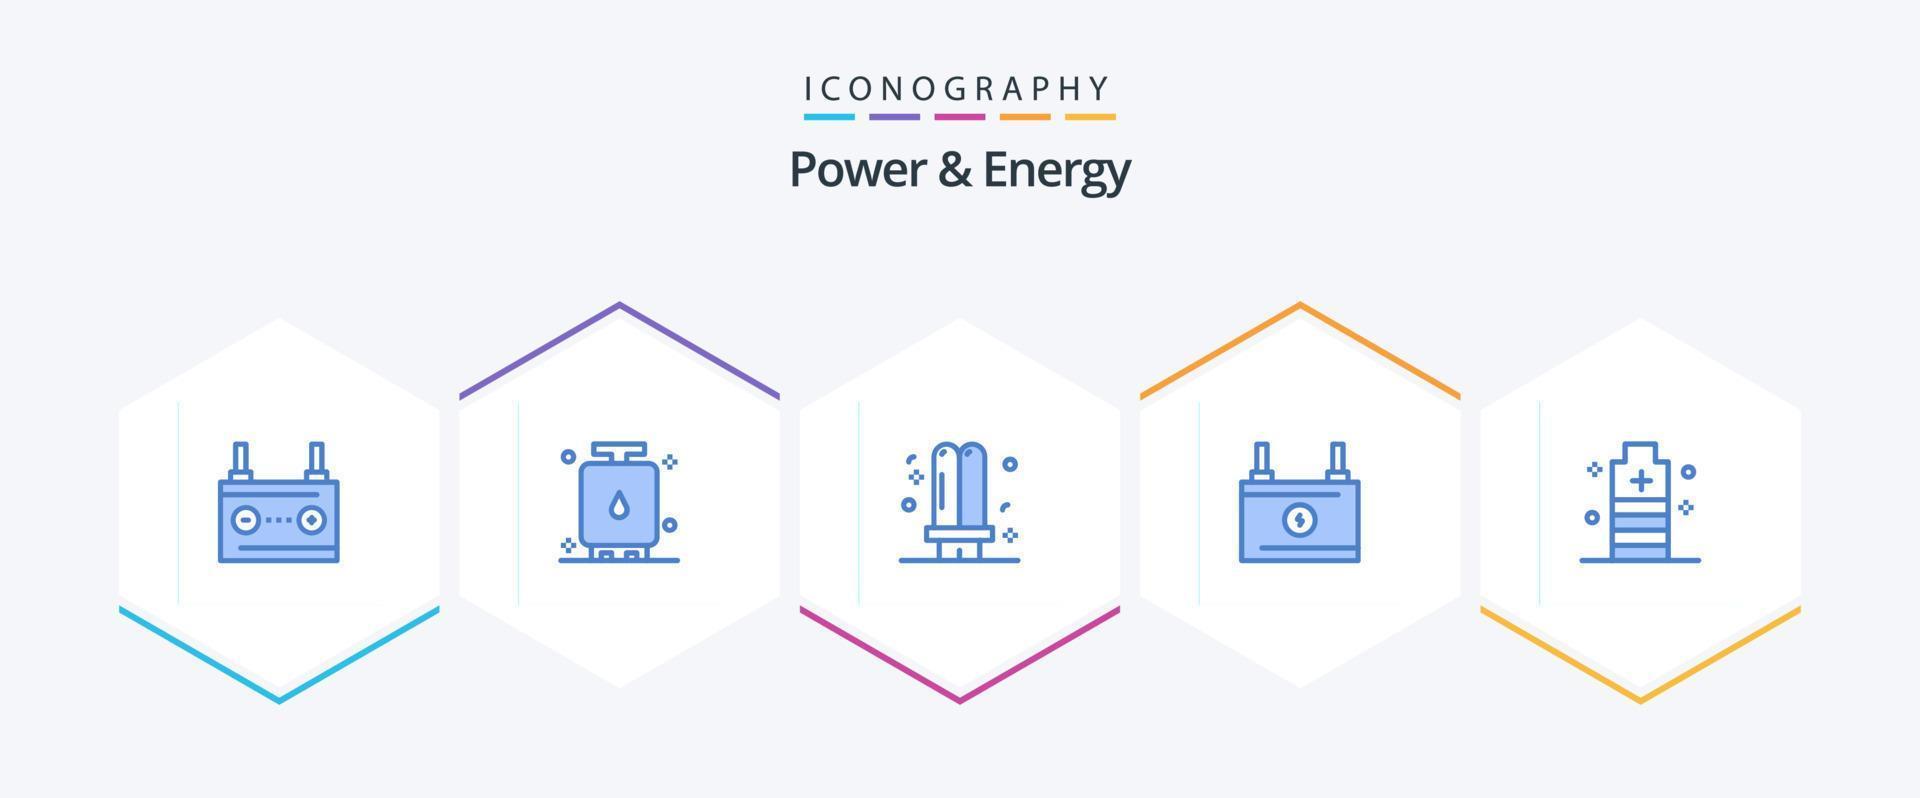 energia e energia 25 blu icona imballare Compreso energia. accumulatore. potenza. luce. energia vettore